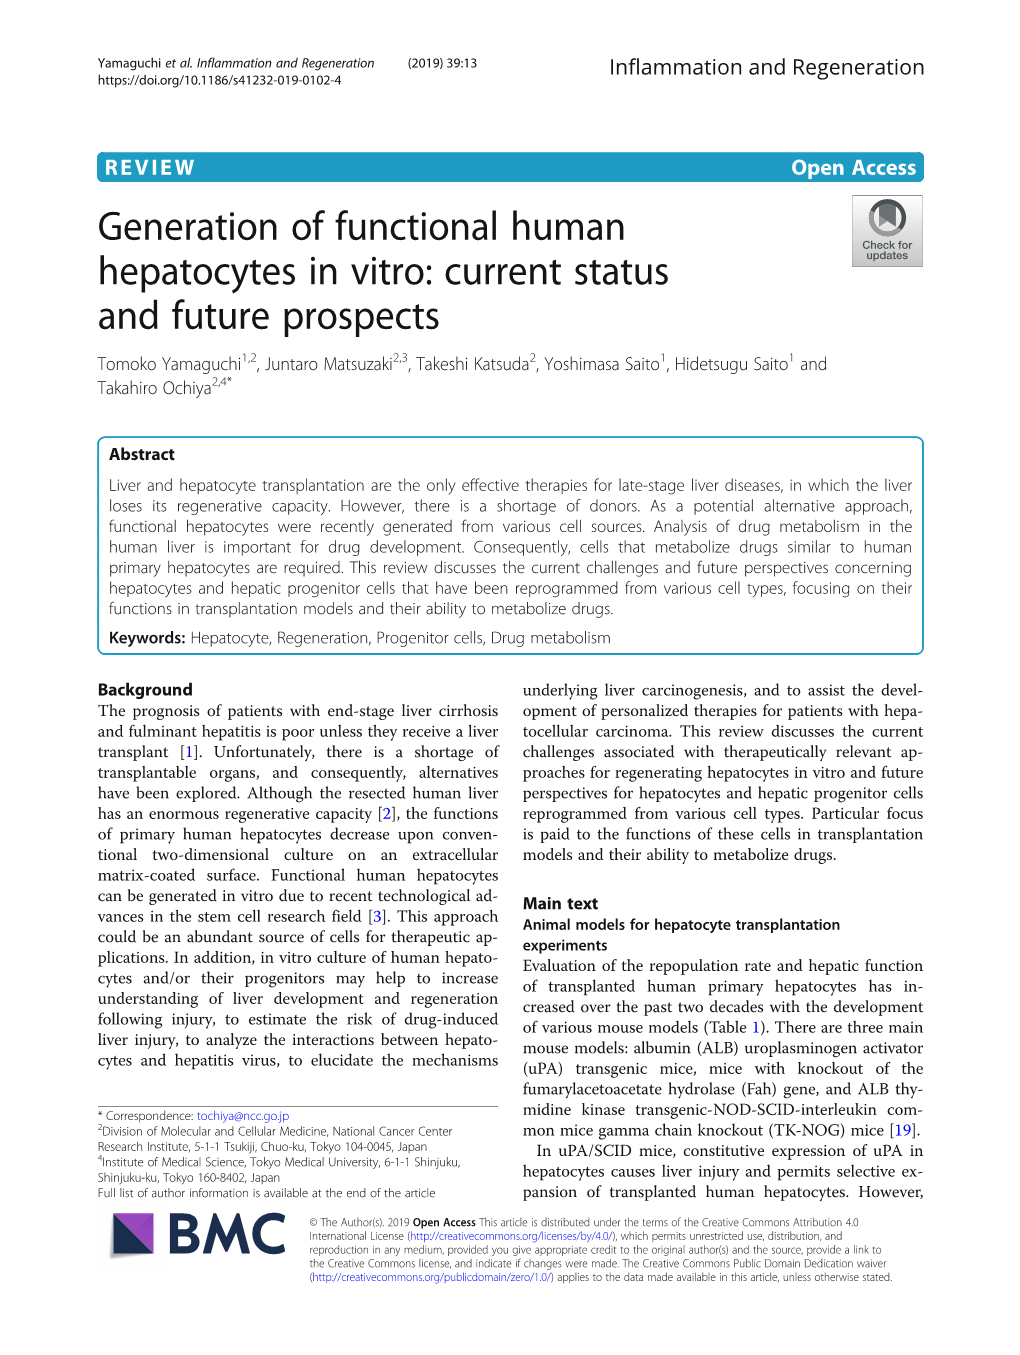 Generation of Functional Human Hepatocytes in Vitro: Current Status